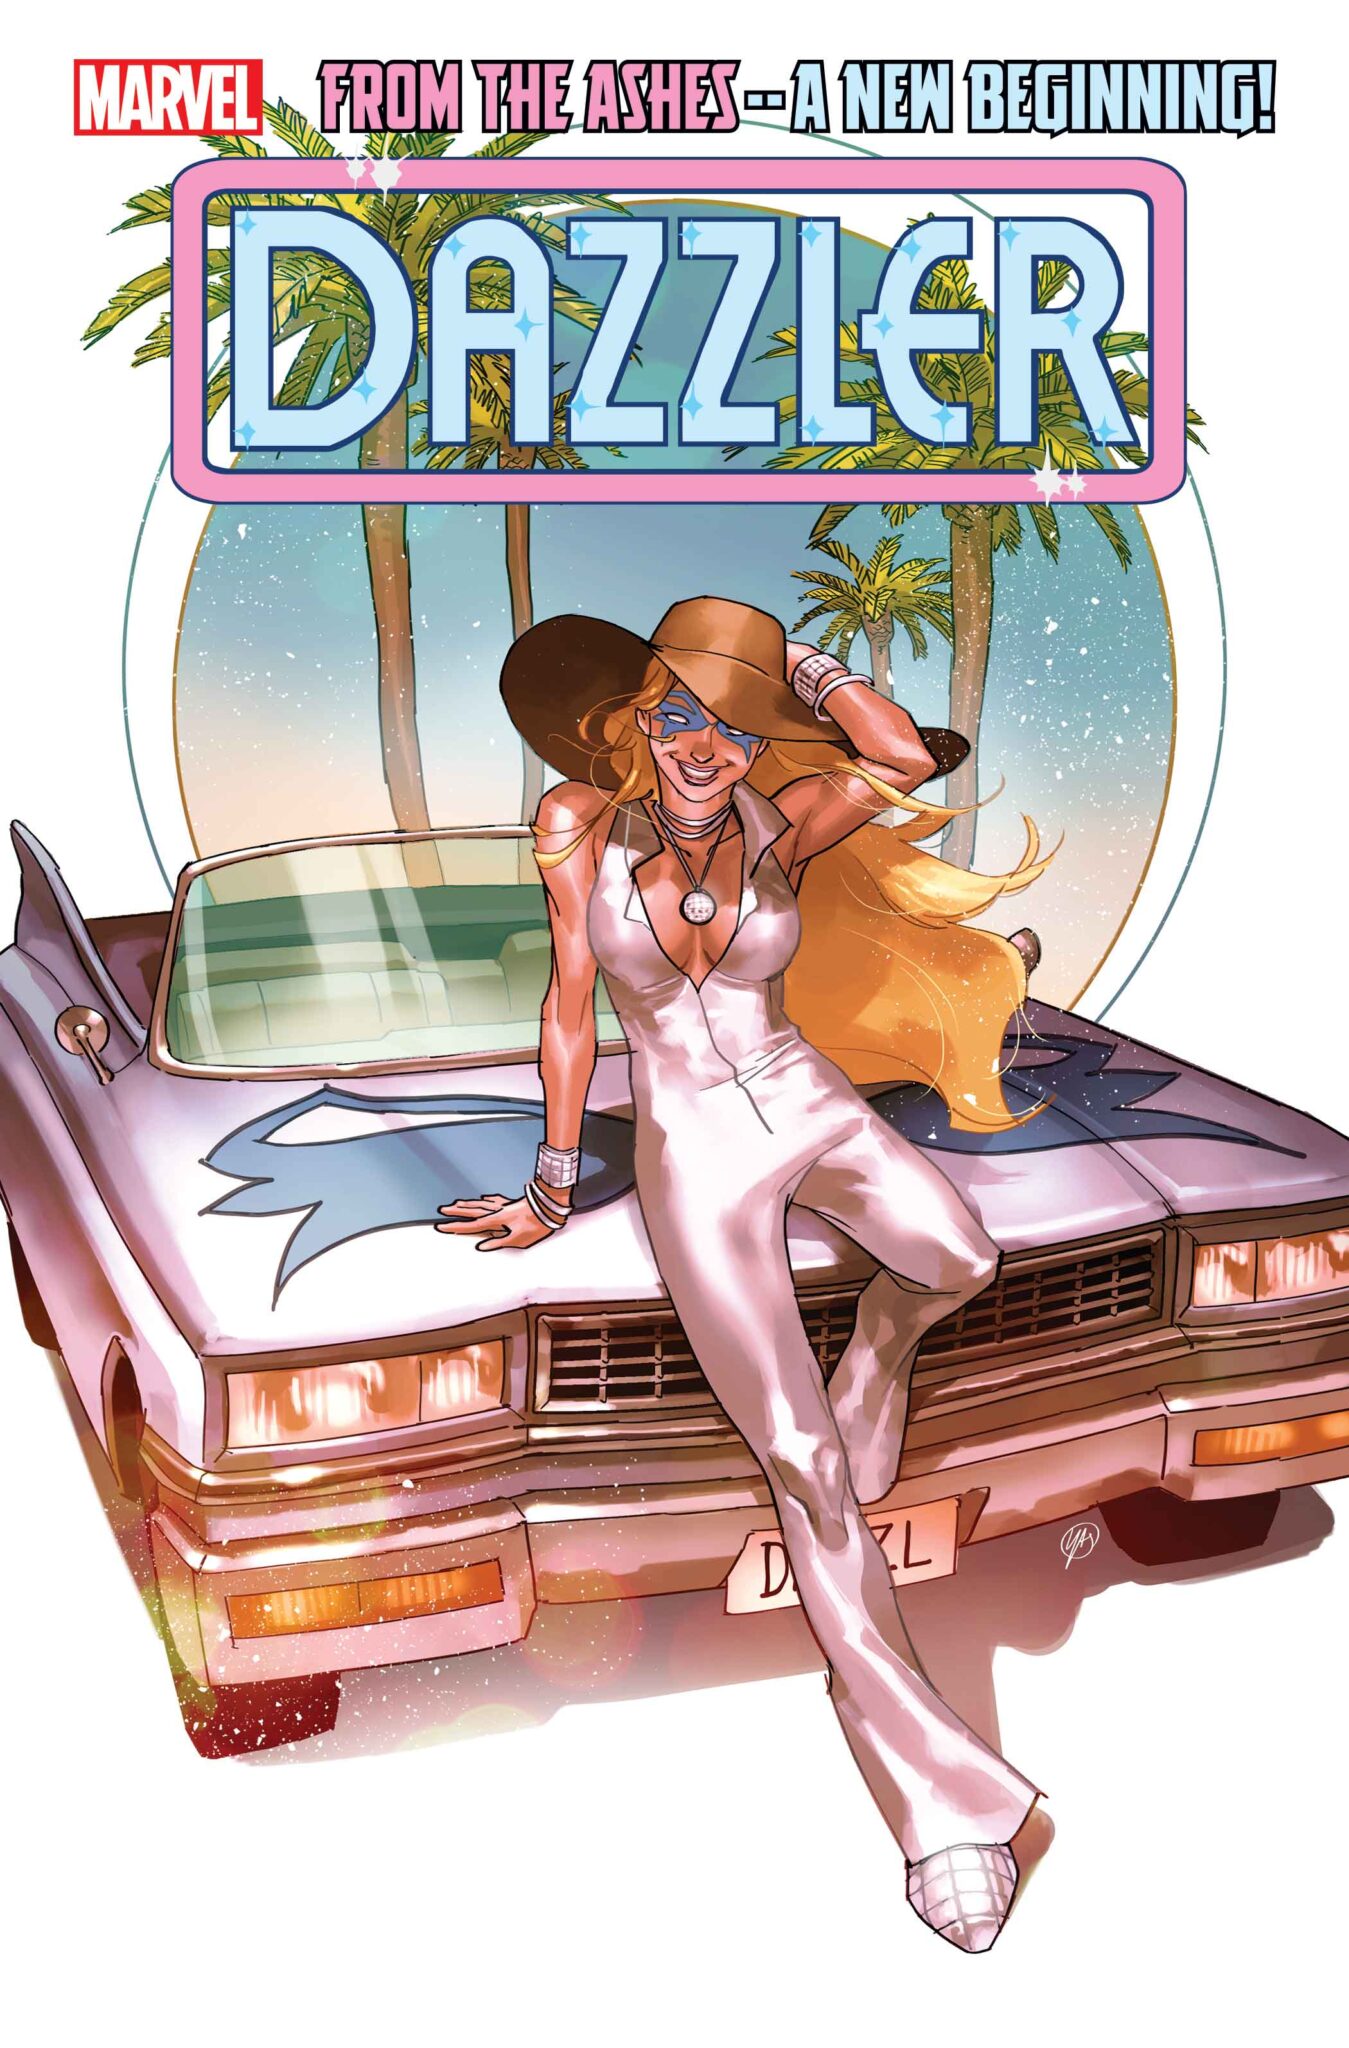 DAZZLER #1 variant cover